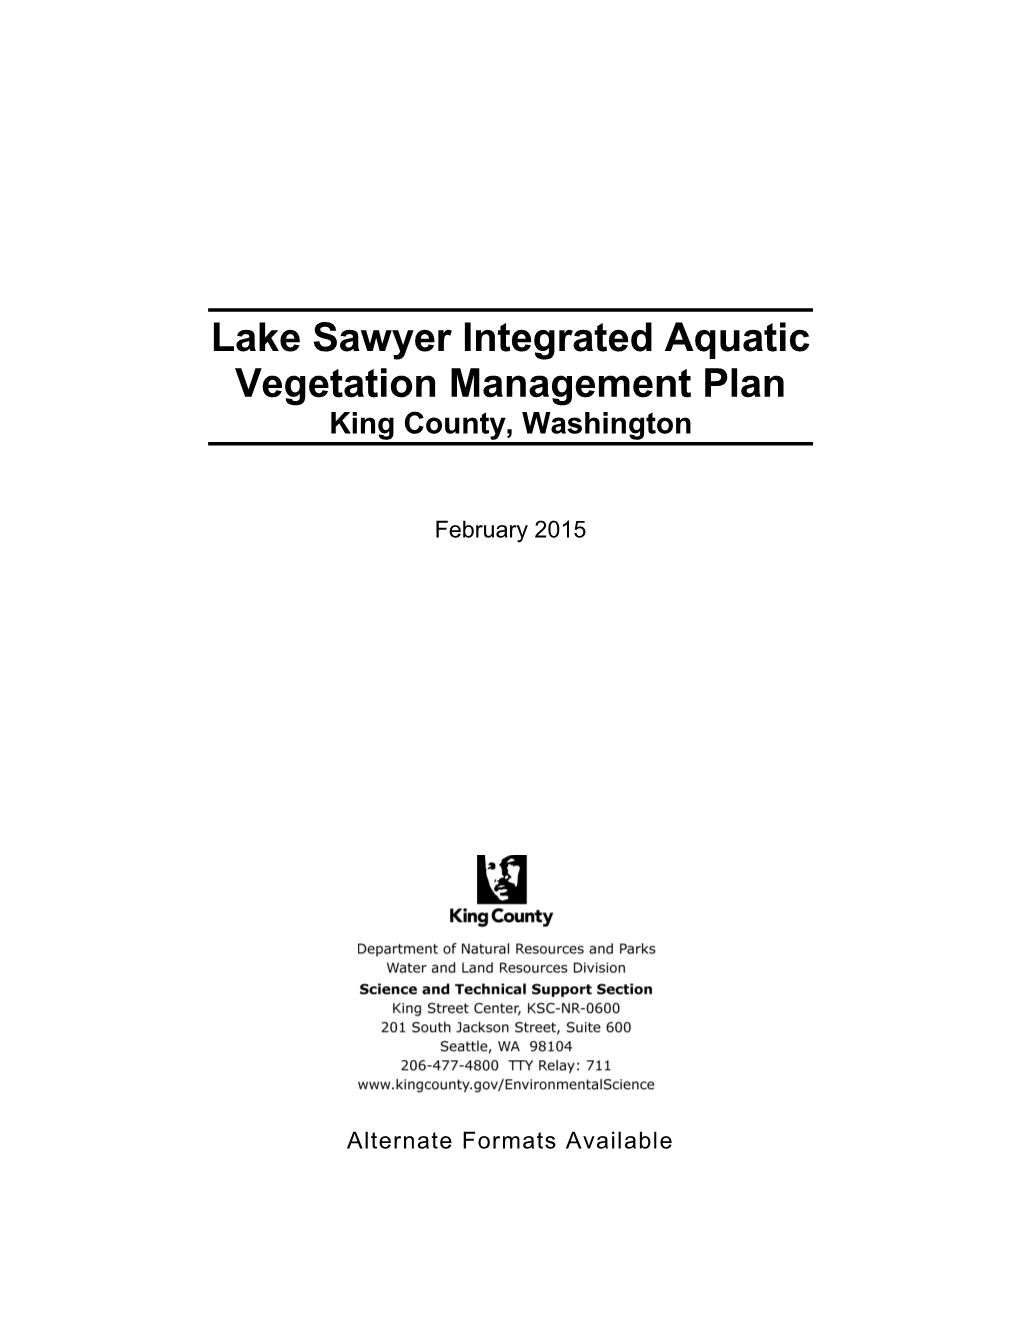 Lake Sawyer Integrated Aquatic Vegetation Management Plan King County, Washington